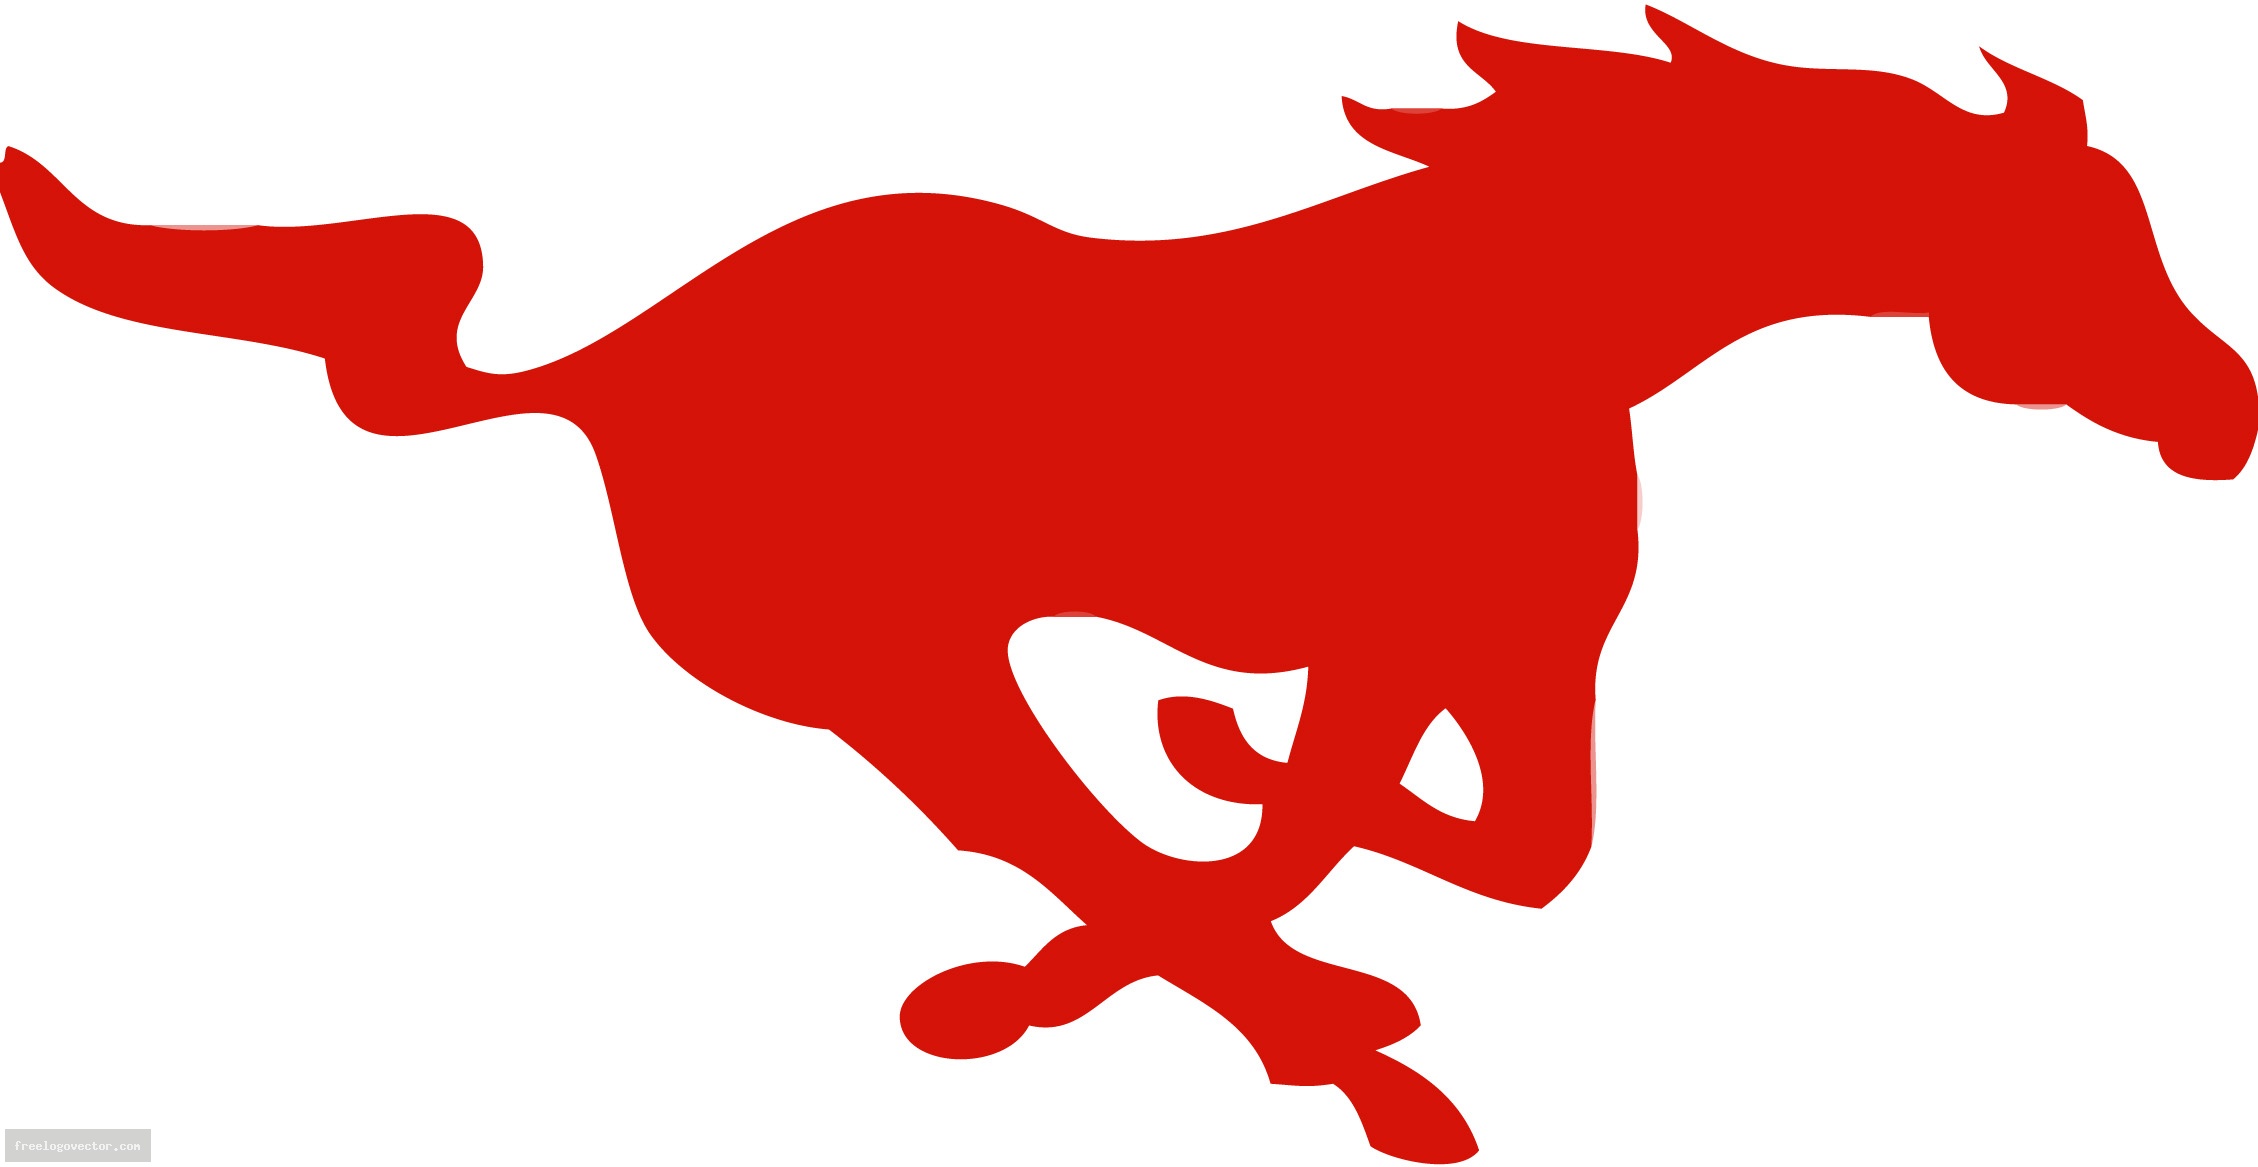 Amazing Mustang Horse Logo Clip Art 2258 X 1167   122 Kb   Jpeg